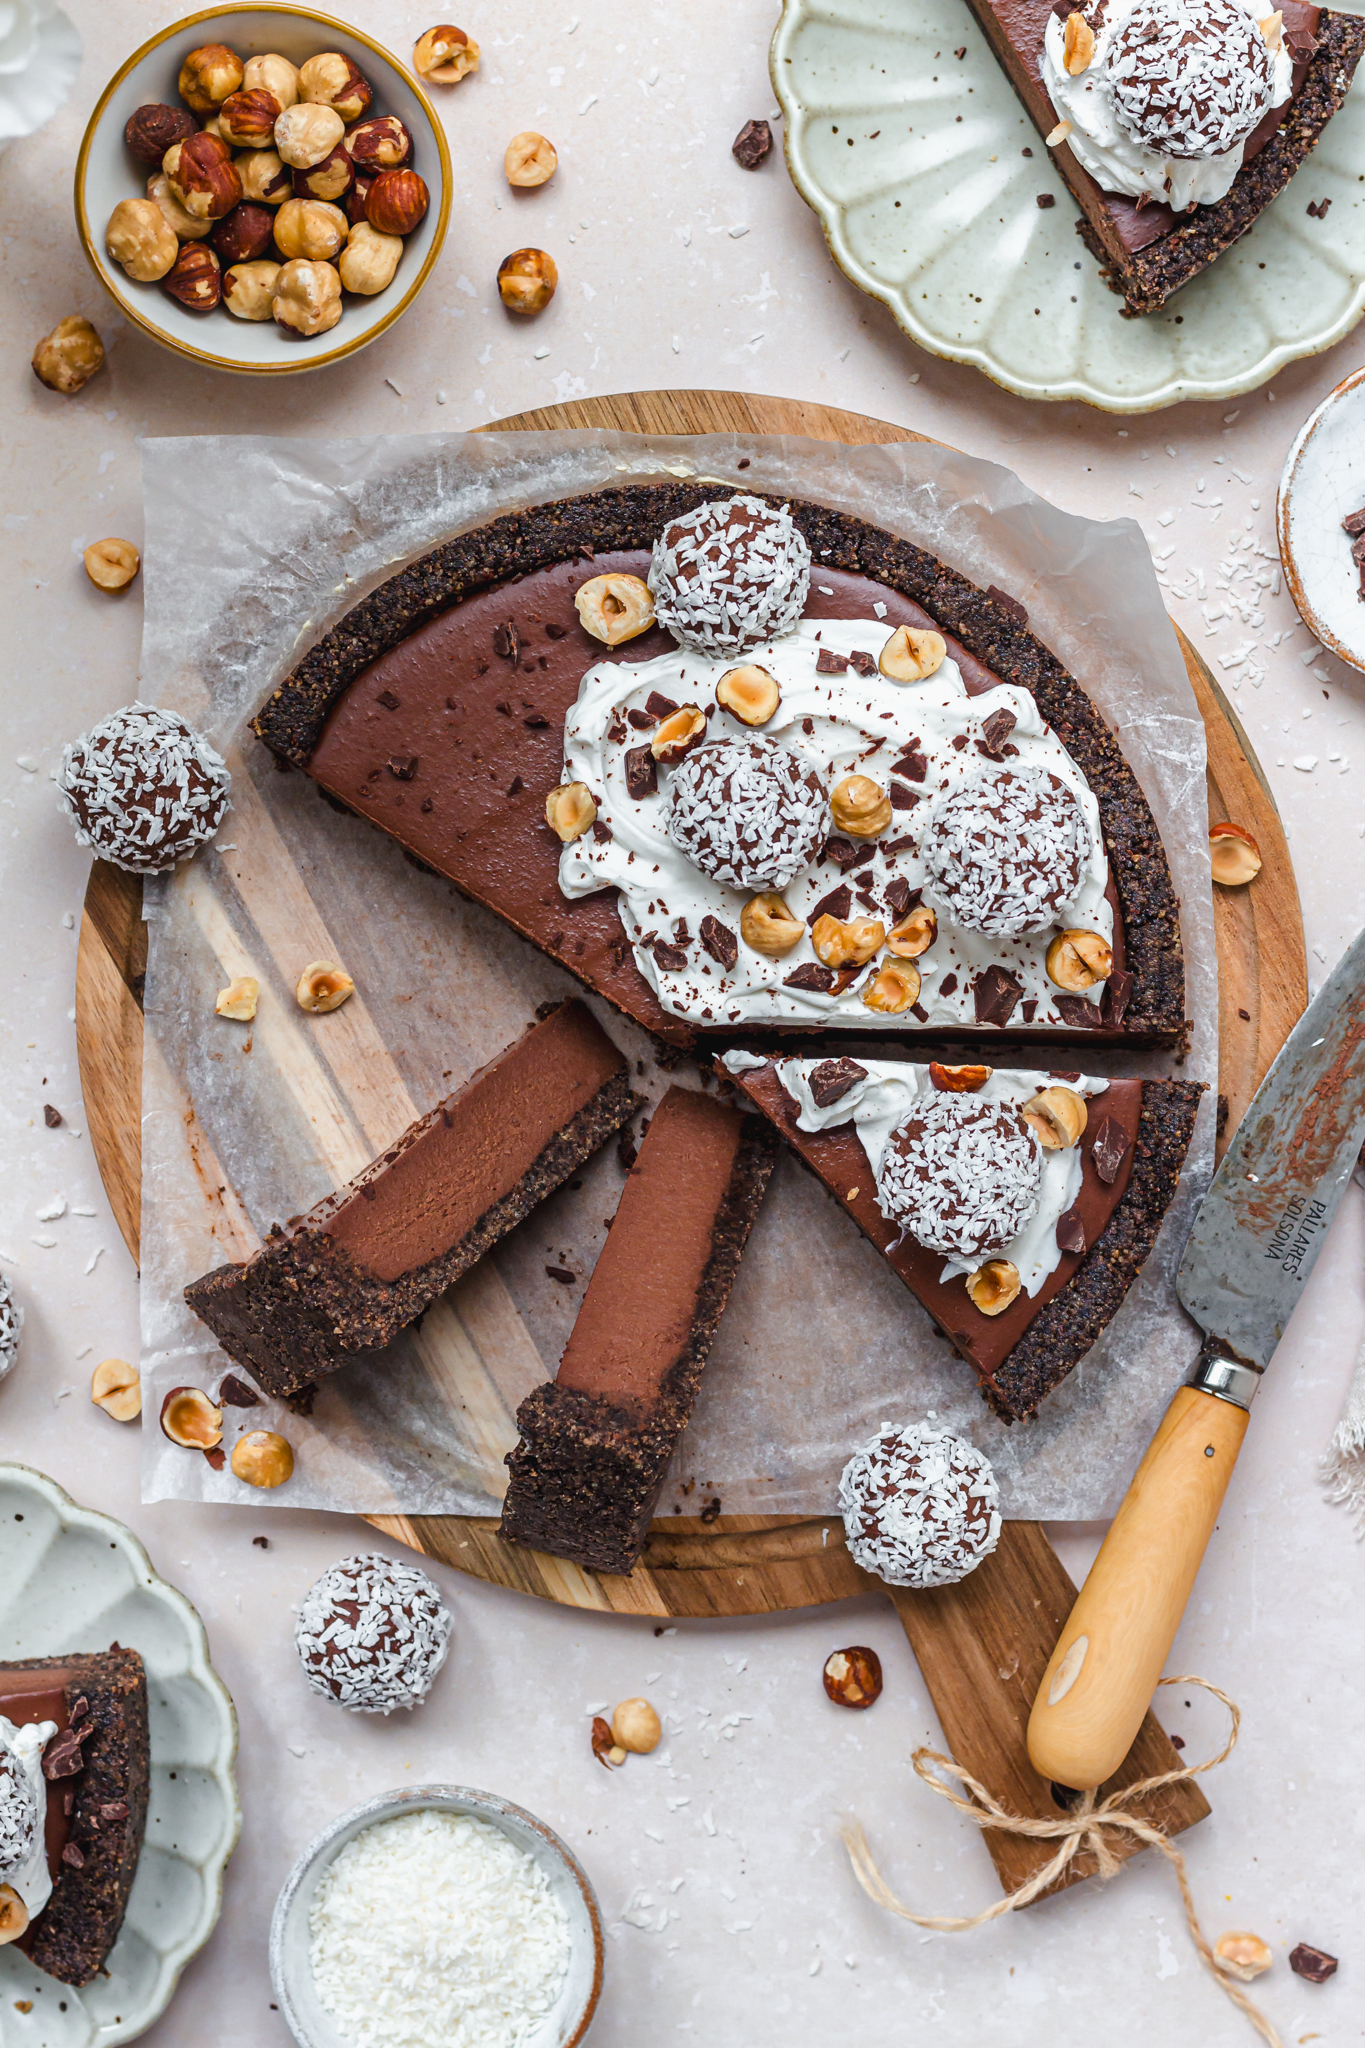 A Double Chocolate Hazelnut Cheesecake